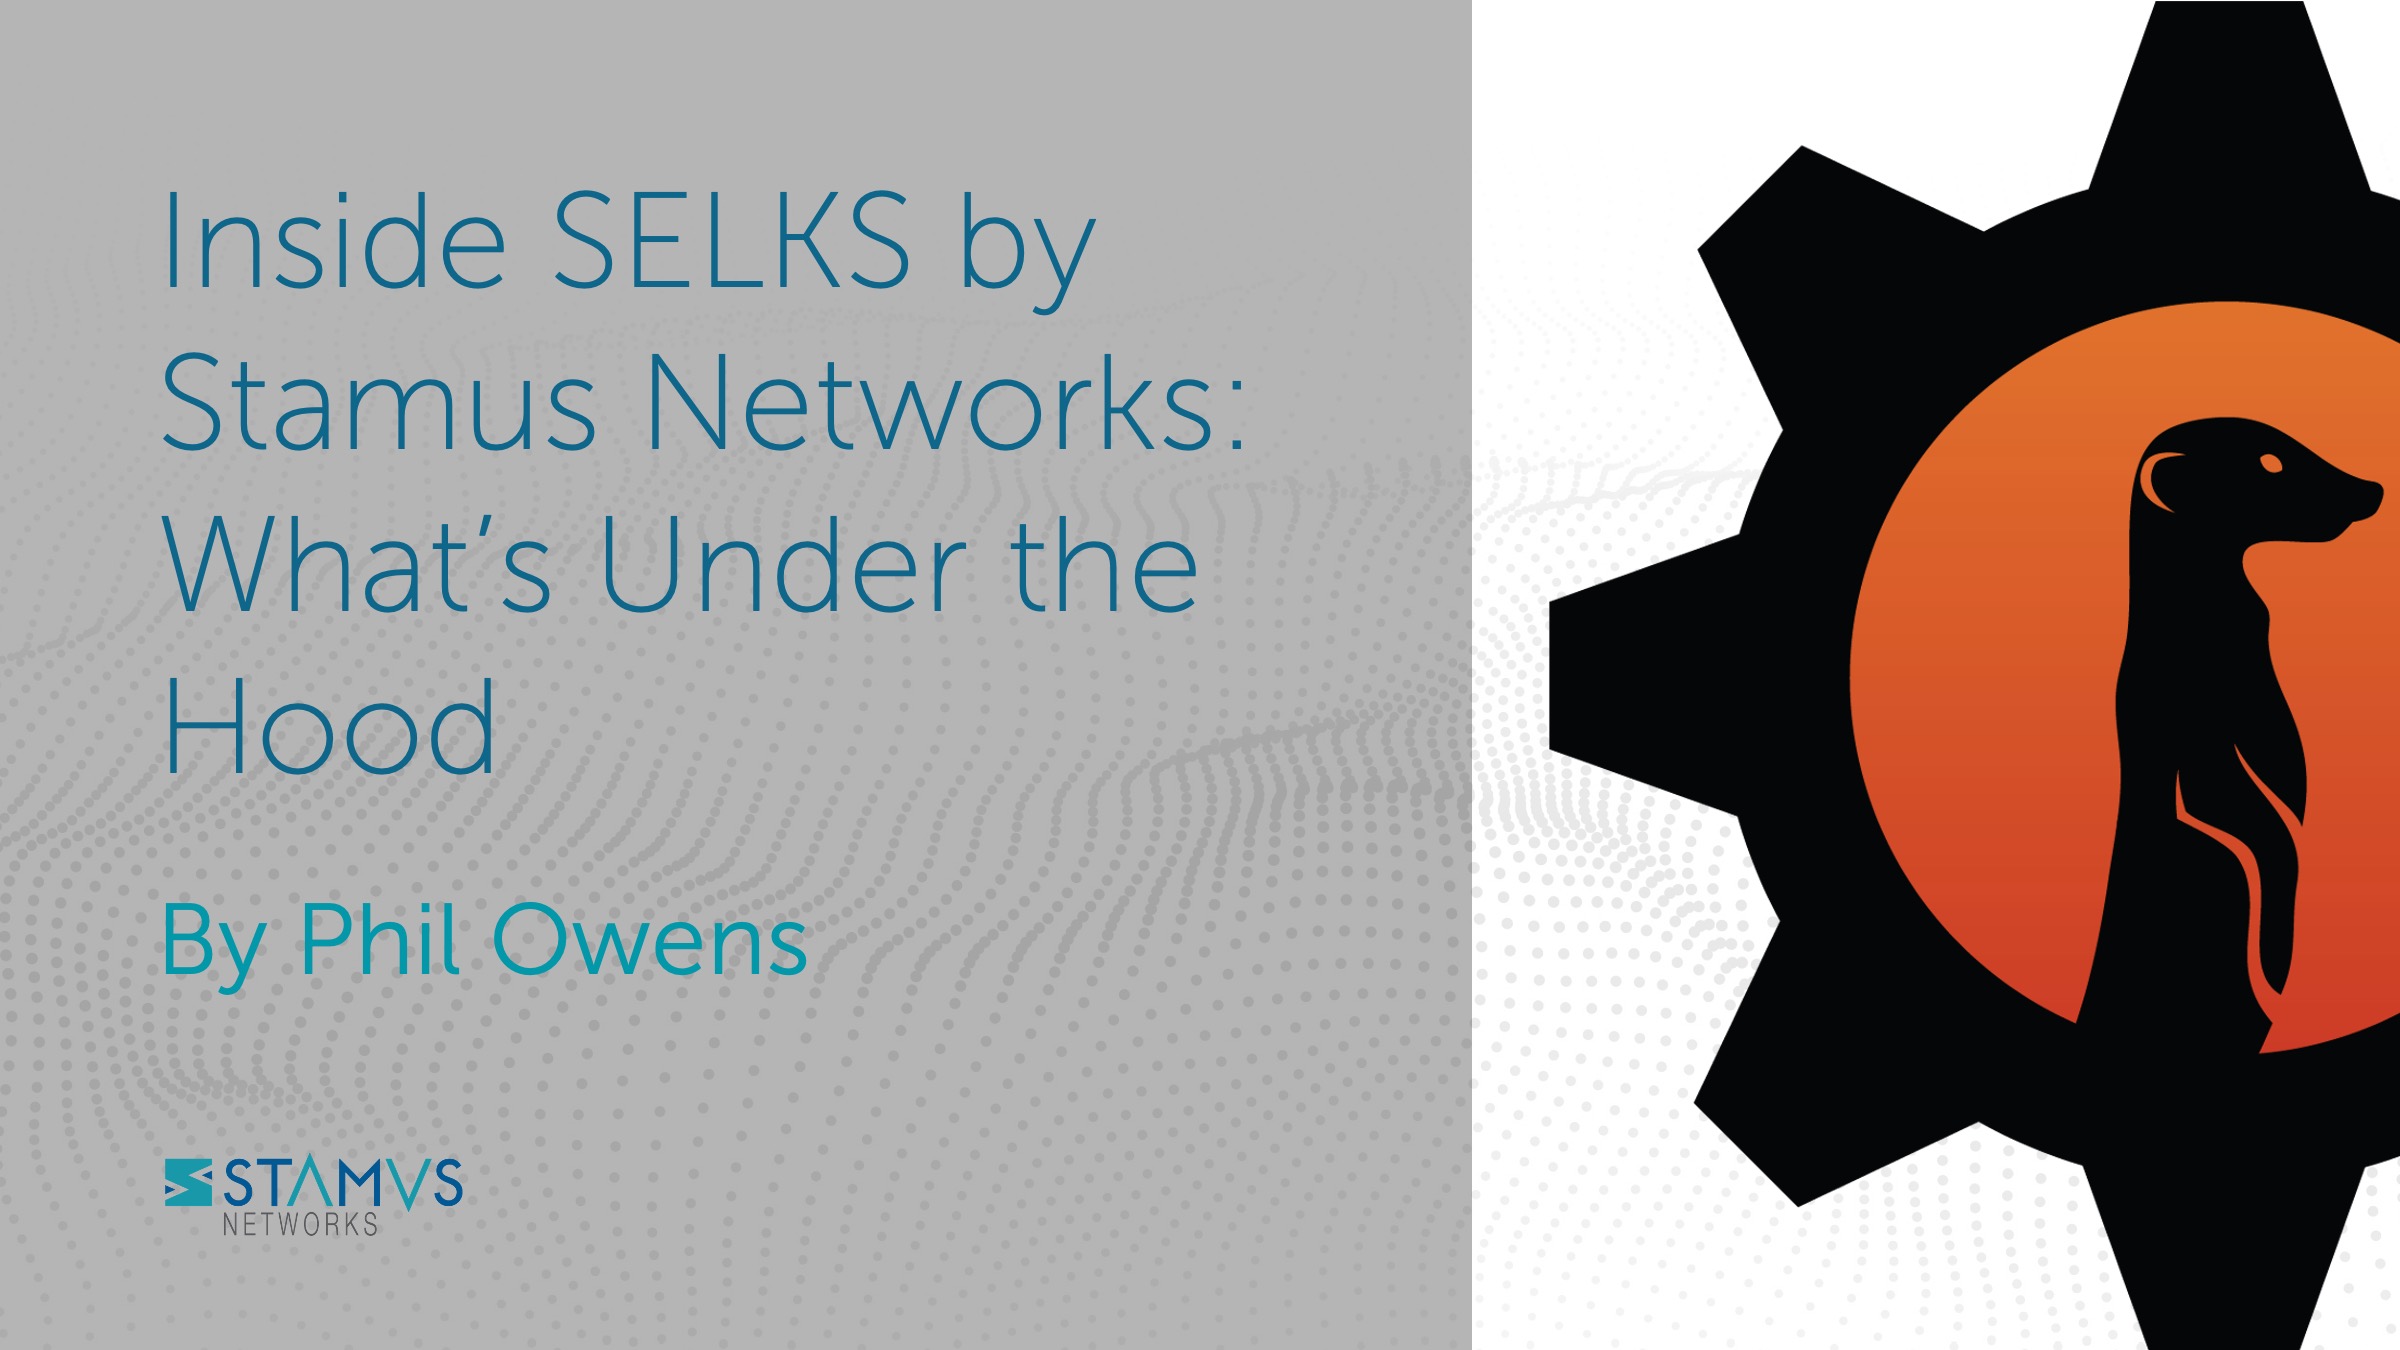 Inside SELKS by Stamus Networks: What's Under the Hood by Phil Owens